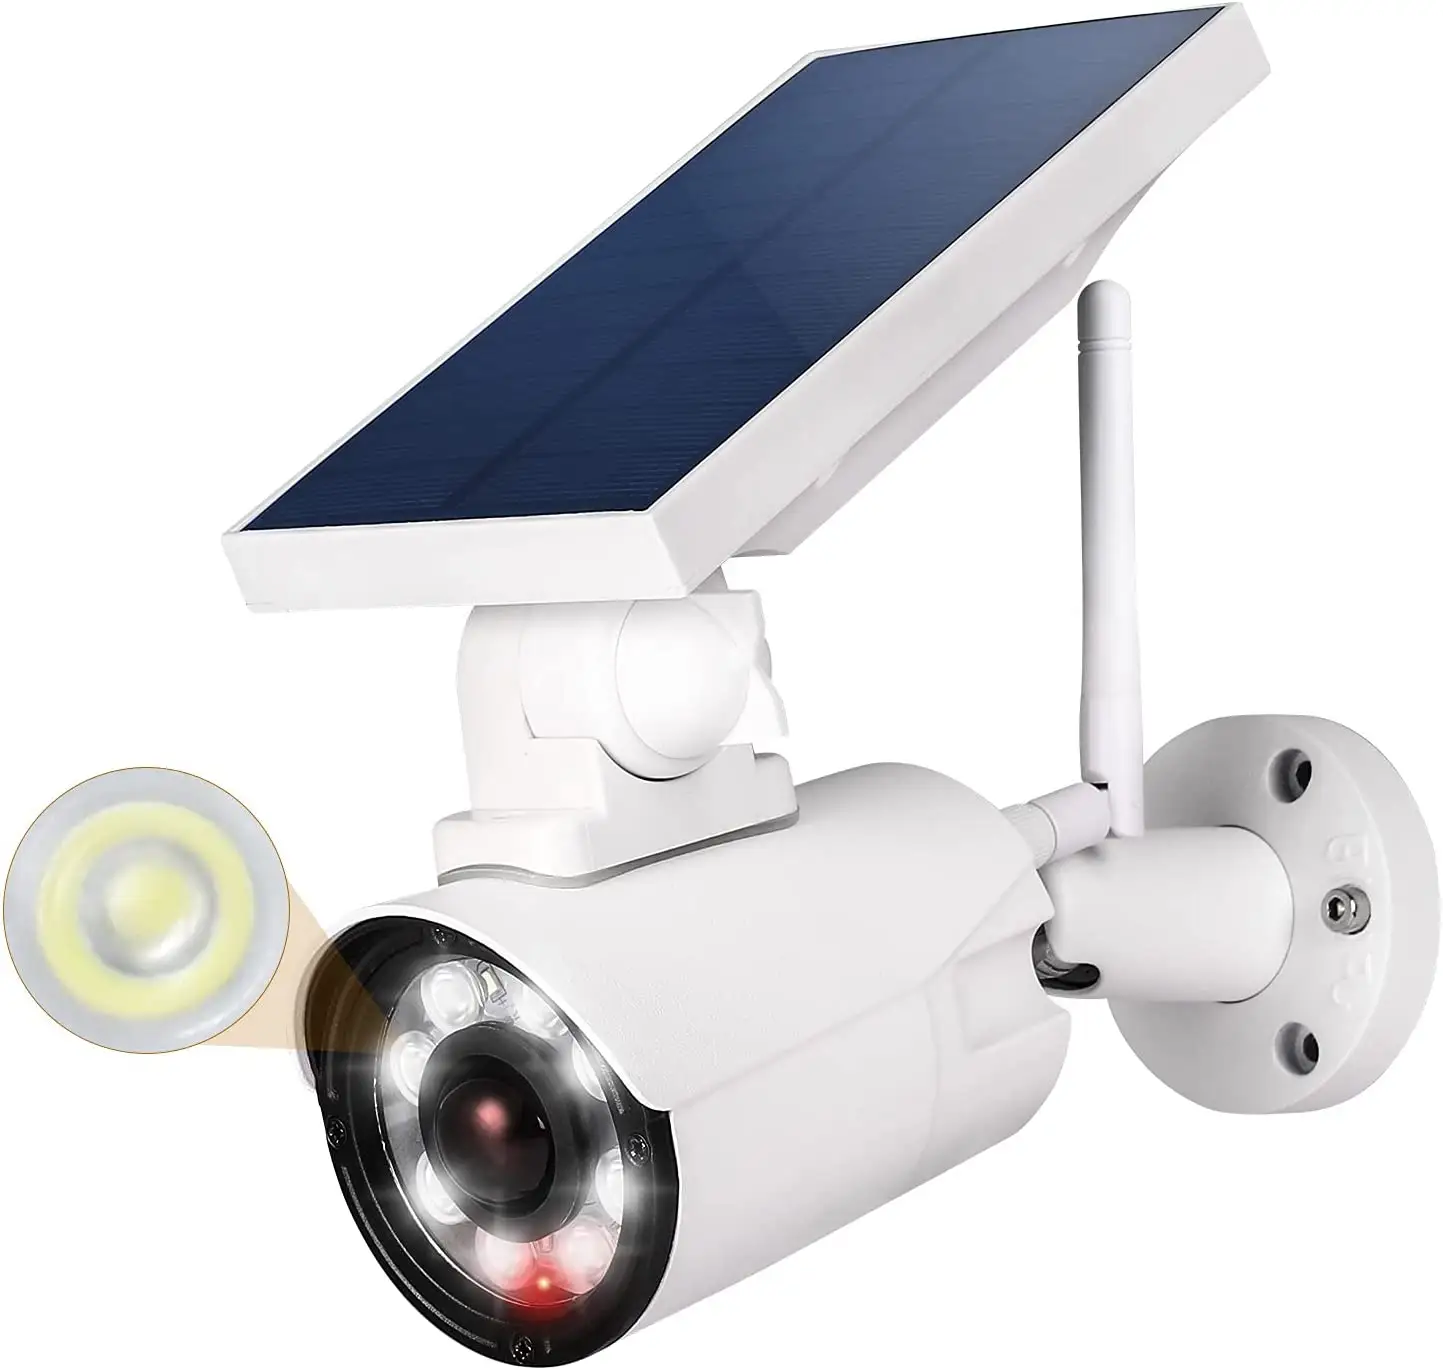 OEM Solar Fake Security Camera Dummy Simulated CCTV Surveillance System with LED PIR Motion Sensor Fake Dummy CCTV Cameras